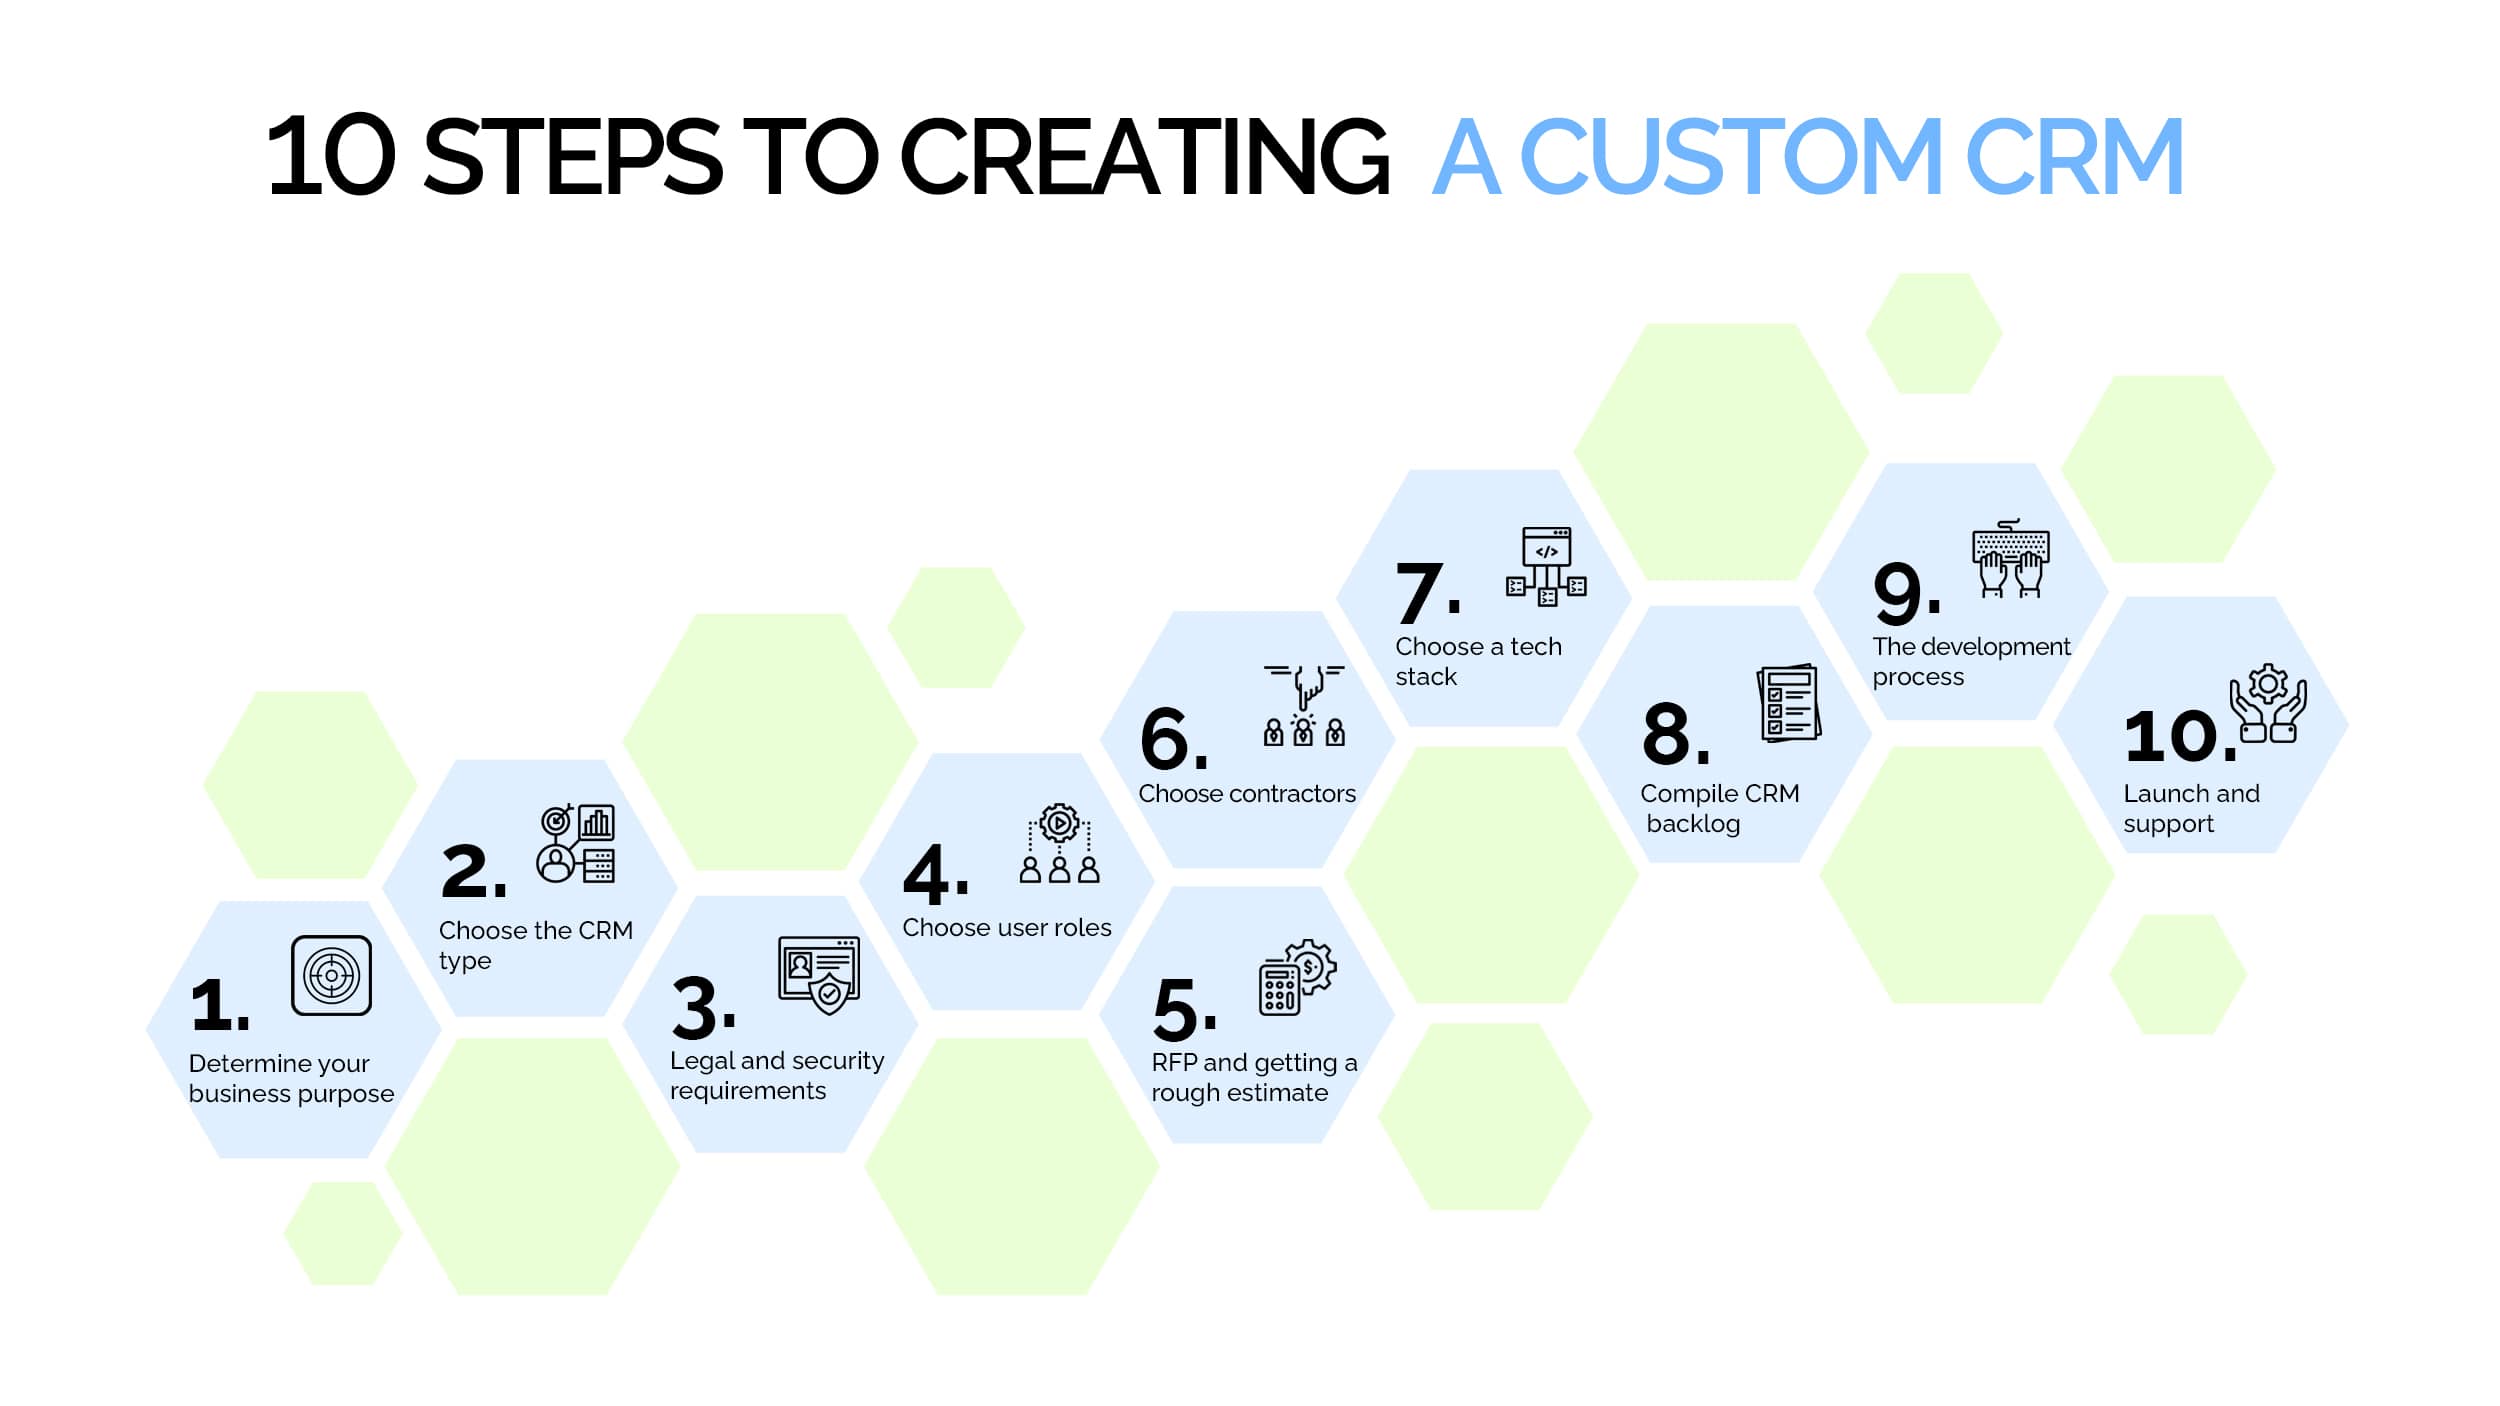 10 steps to creating a custom CRM